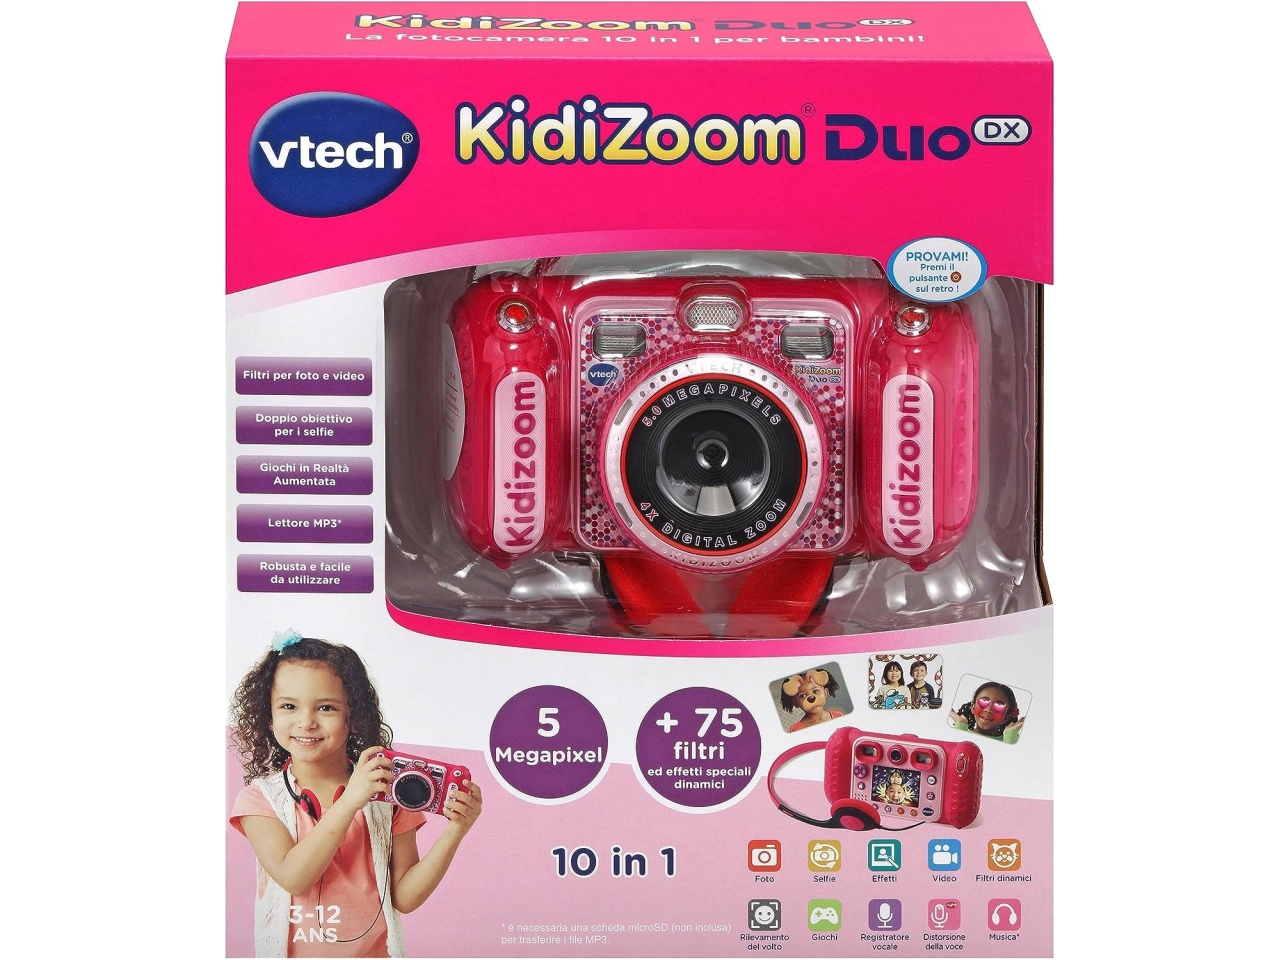 Vtech macchina fotografica per bambini kidizzom duo dx rosa